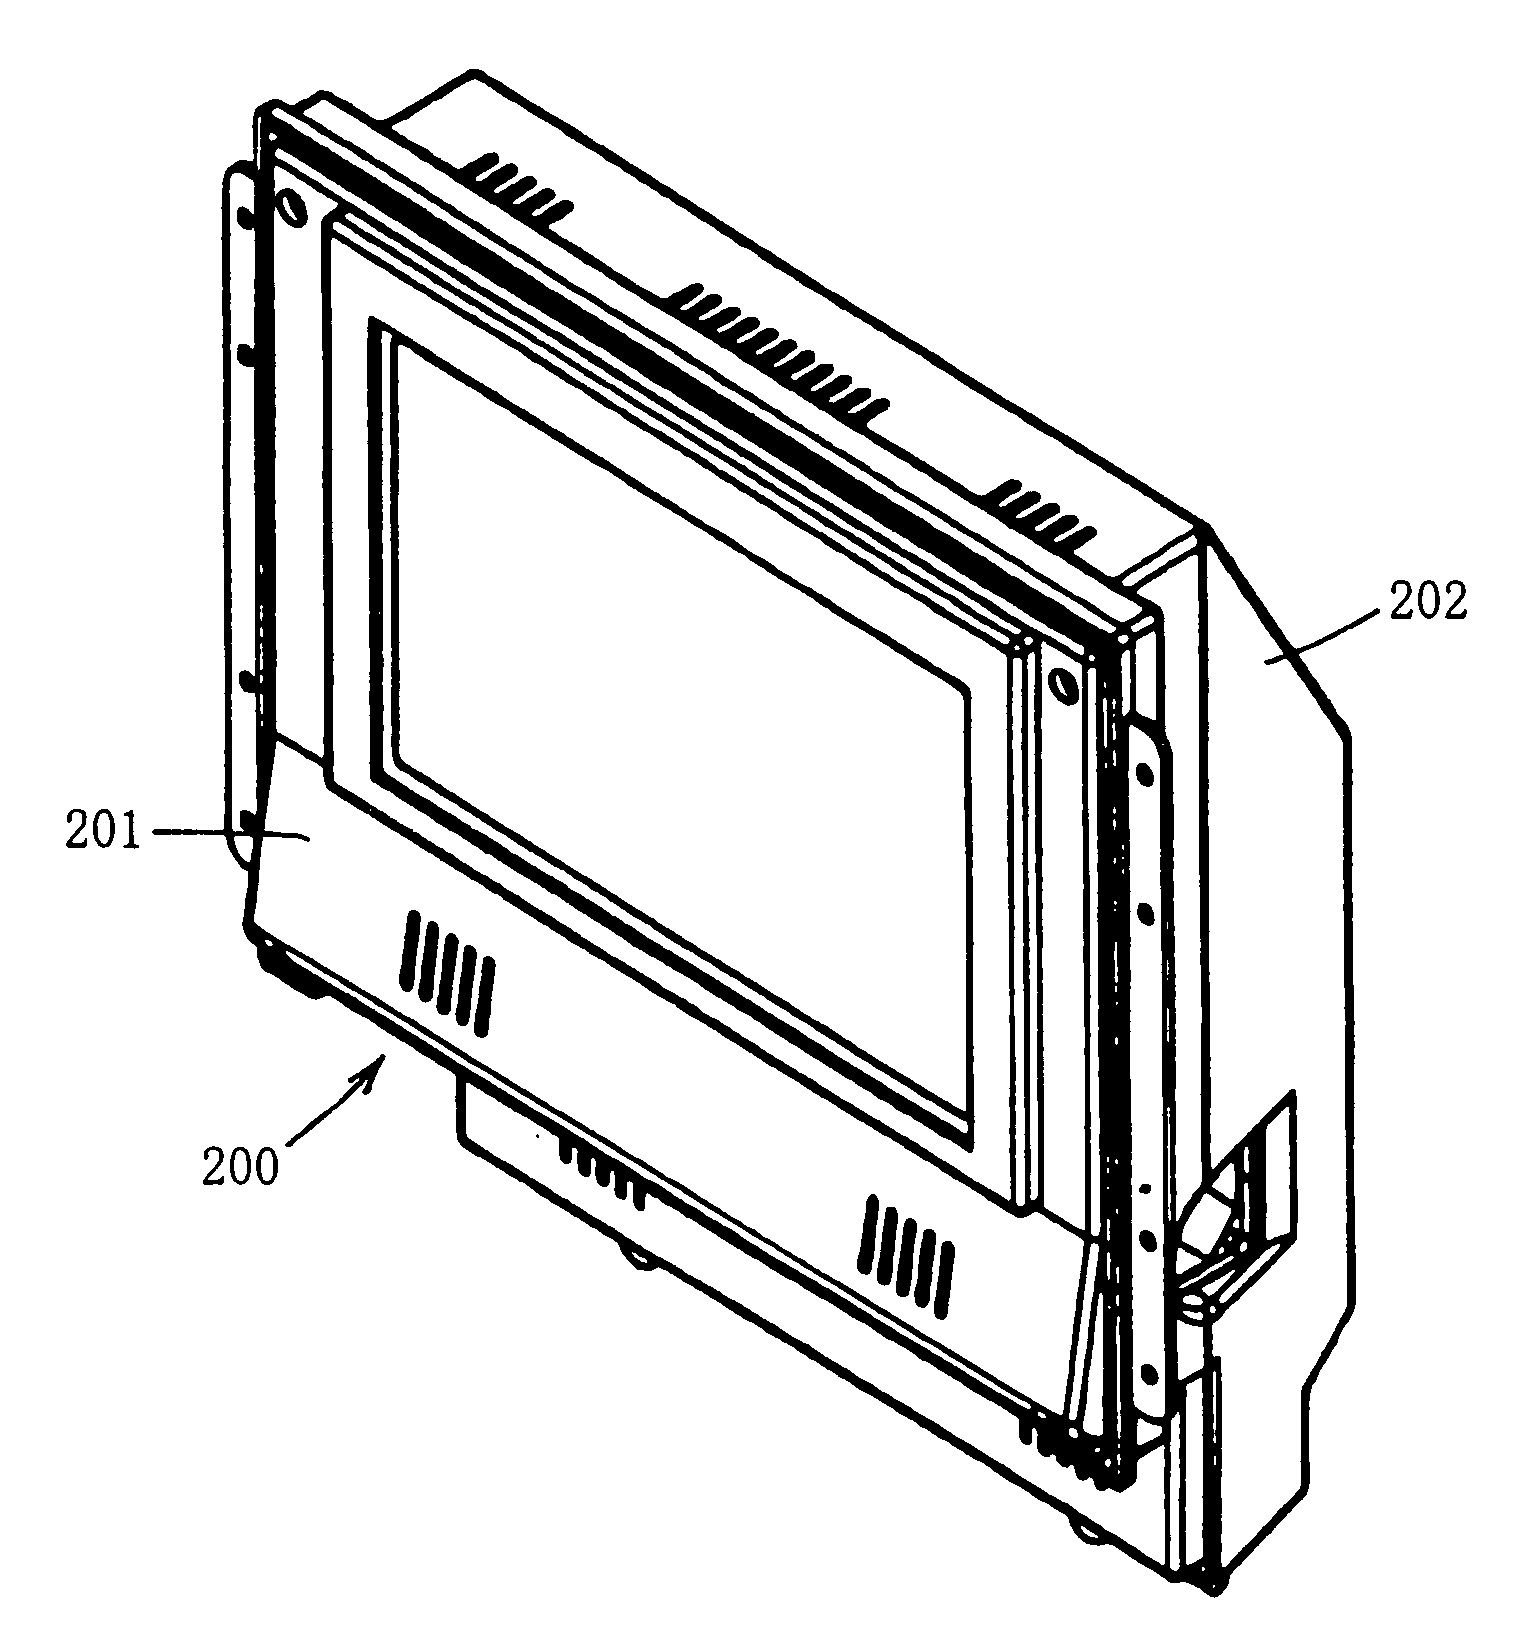 Image display device